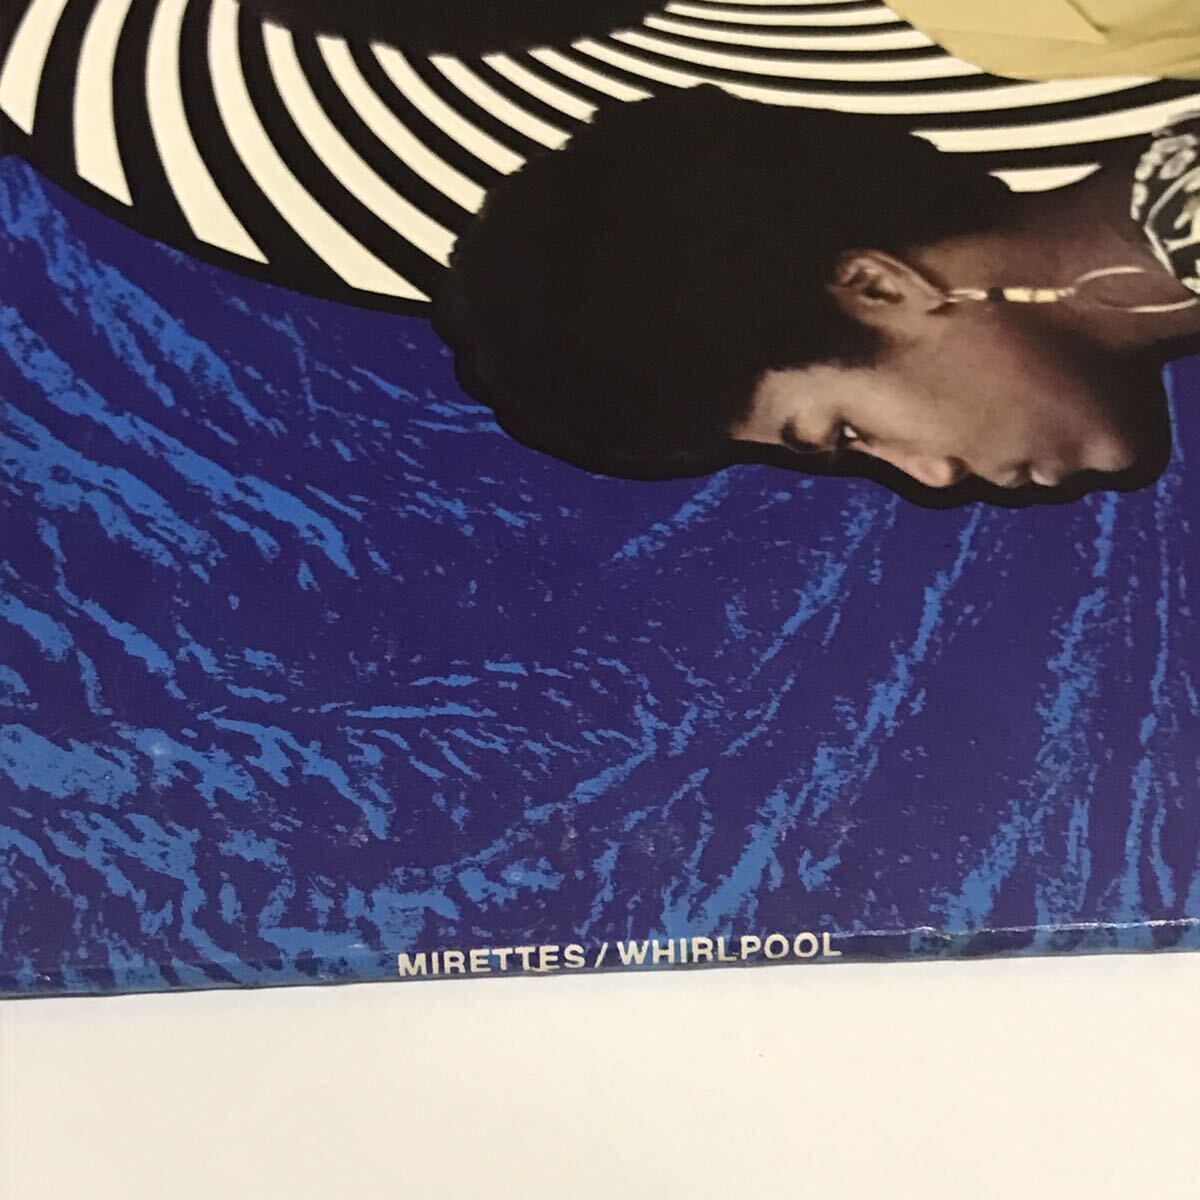 RARE SOUL “PETE ROCK”ネタUSオリジナル盤THE MIRETTES / WHIRLPOOL on UNI RECORDS レアソウル SISTER FUNK US ORIGINAL PRESS_画像4